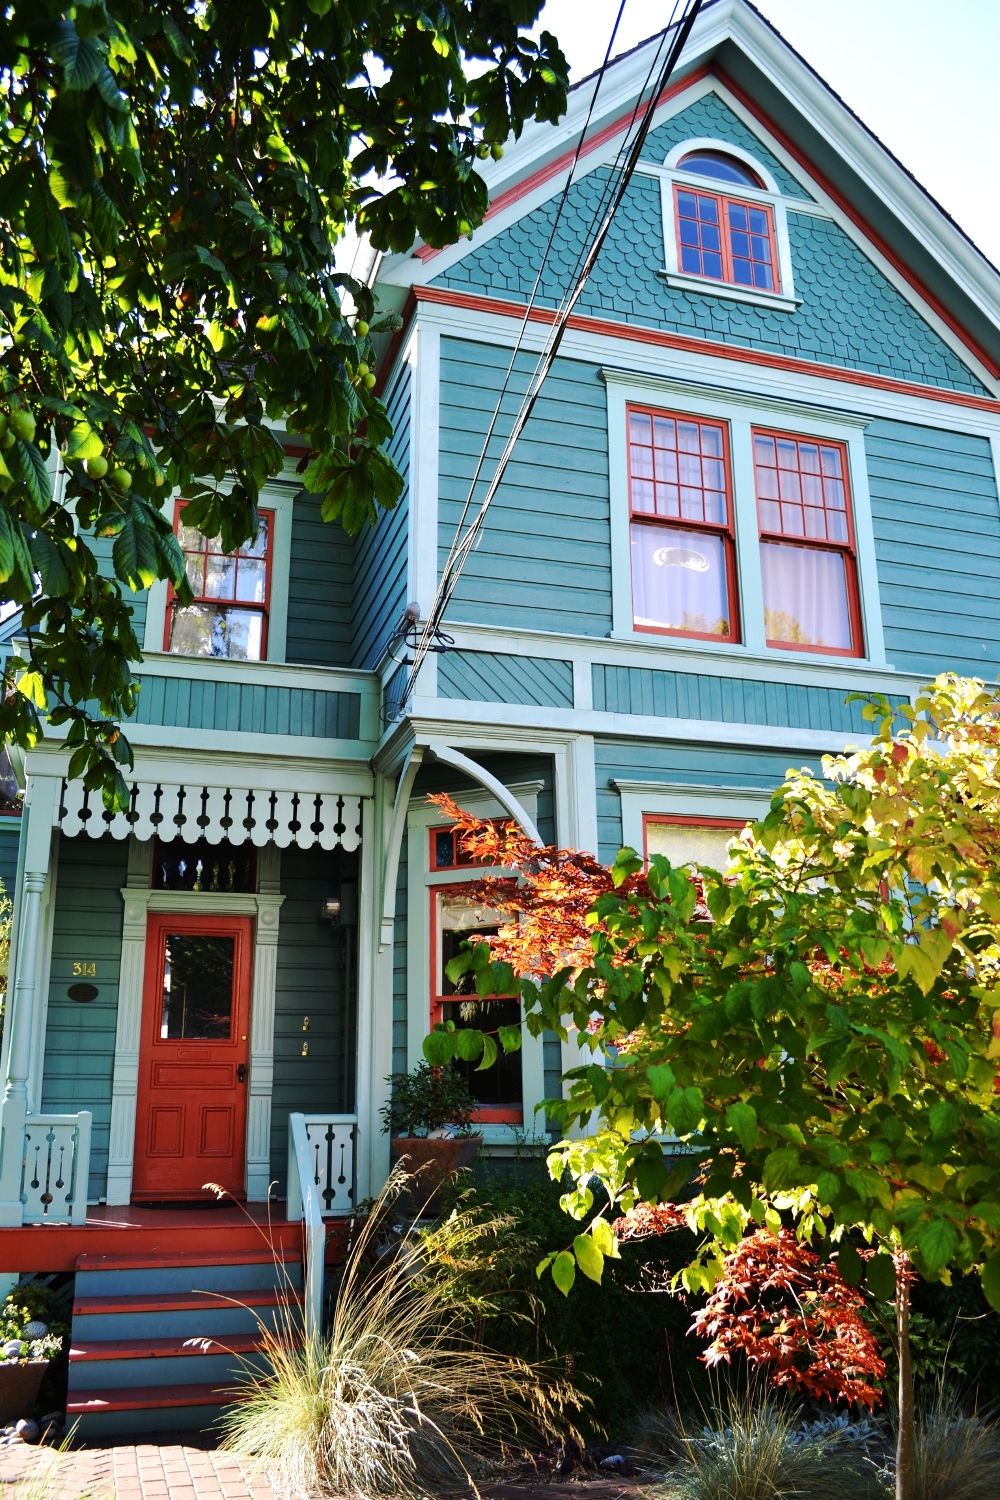 Heritage Homes: One Neighborhood's Approach_2